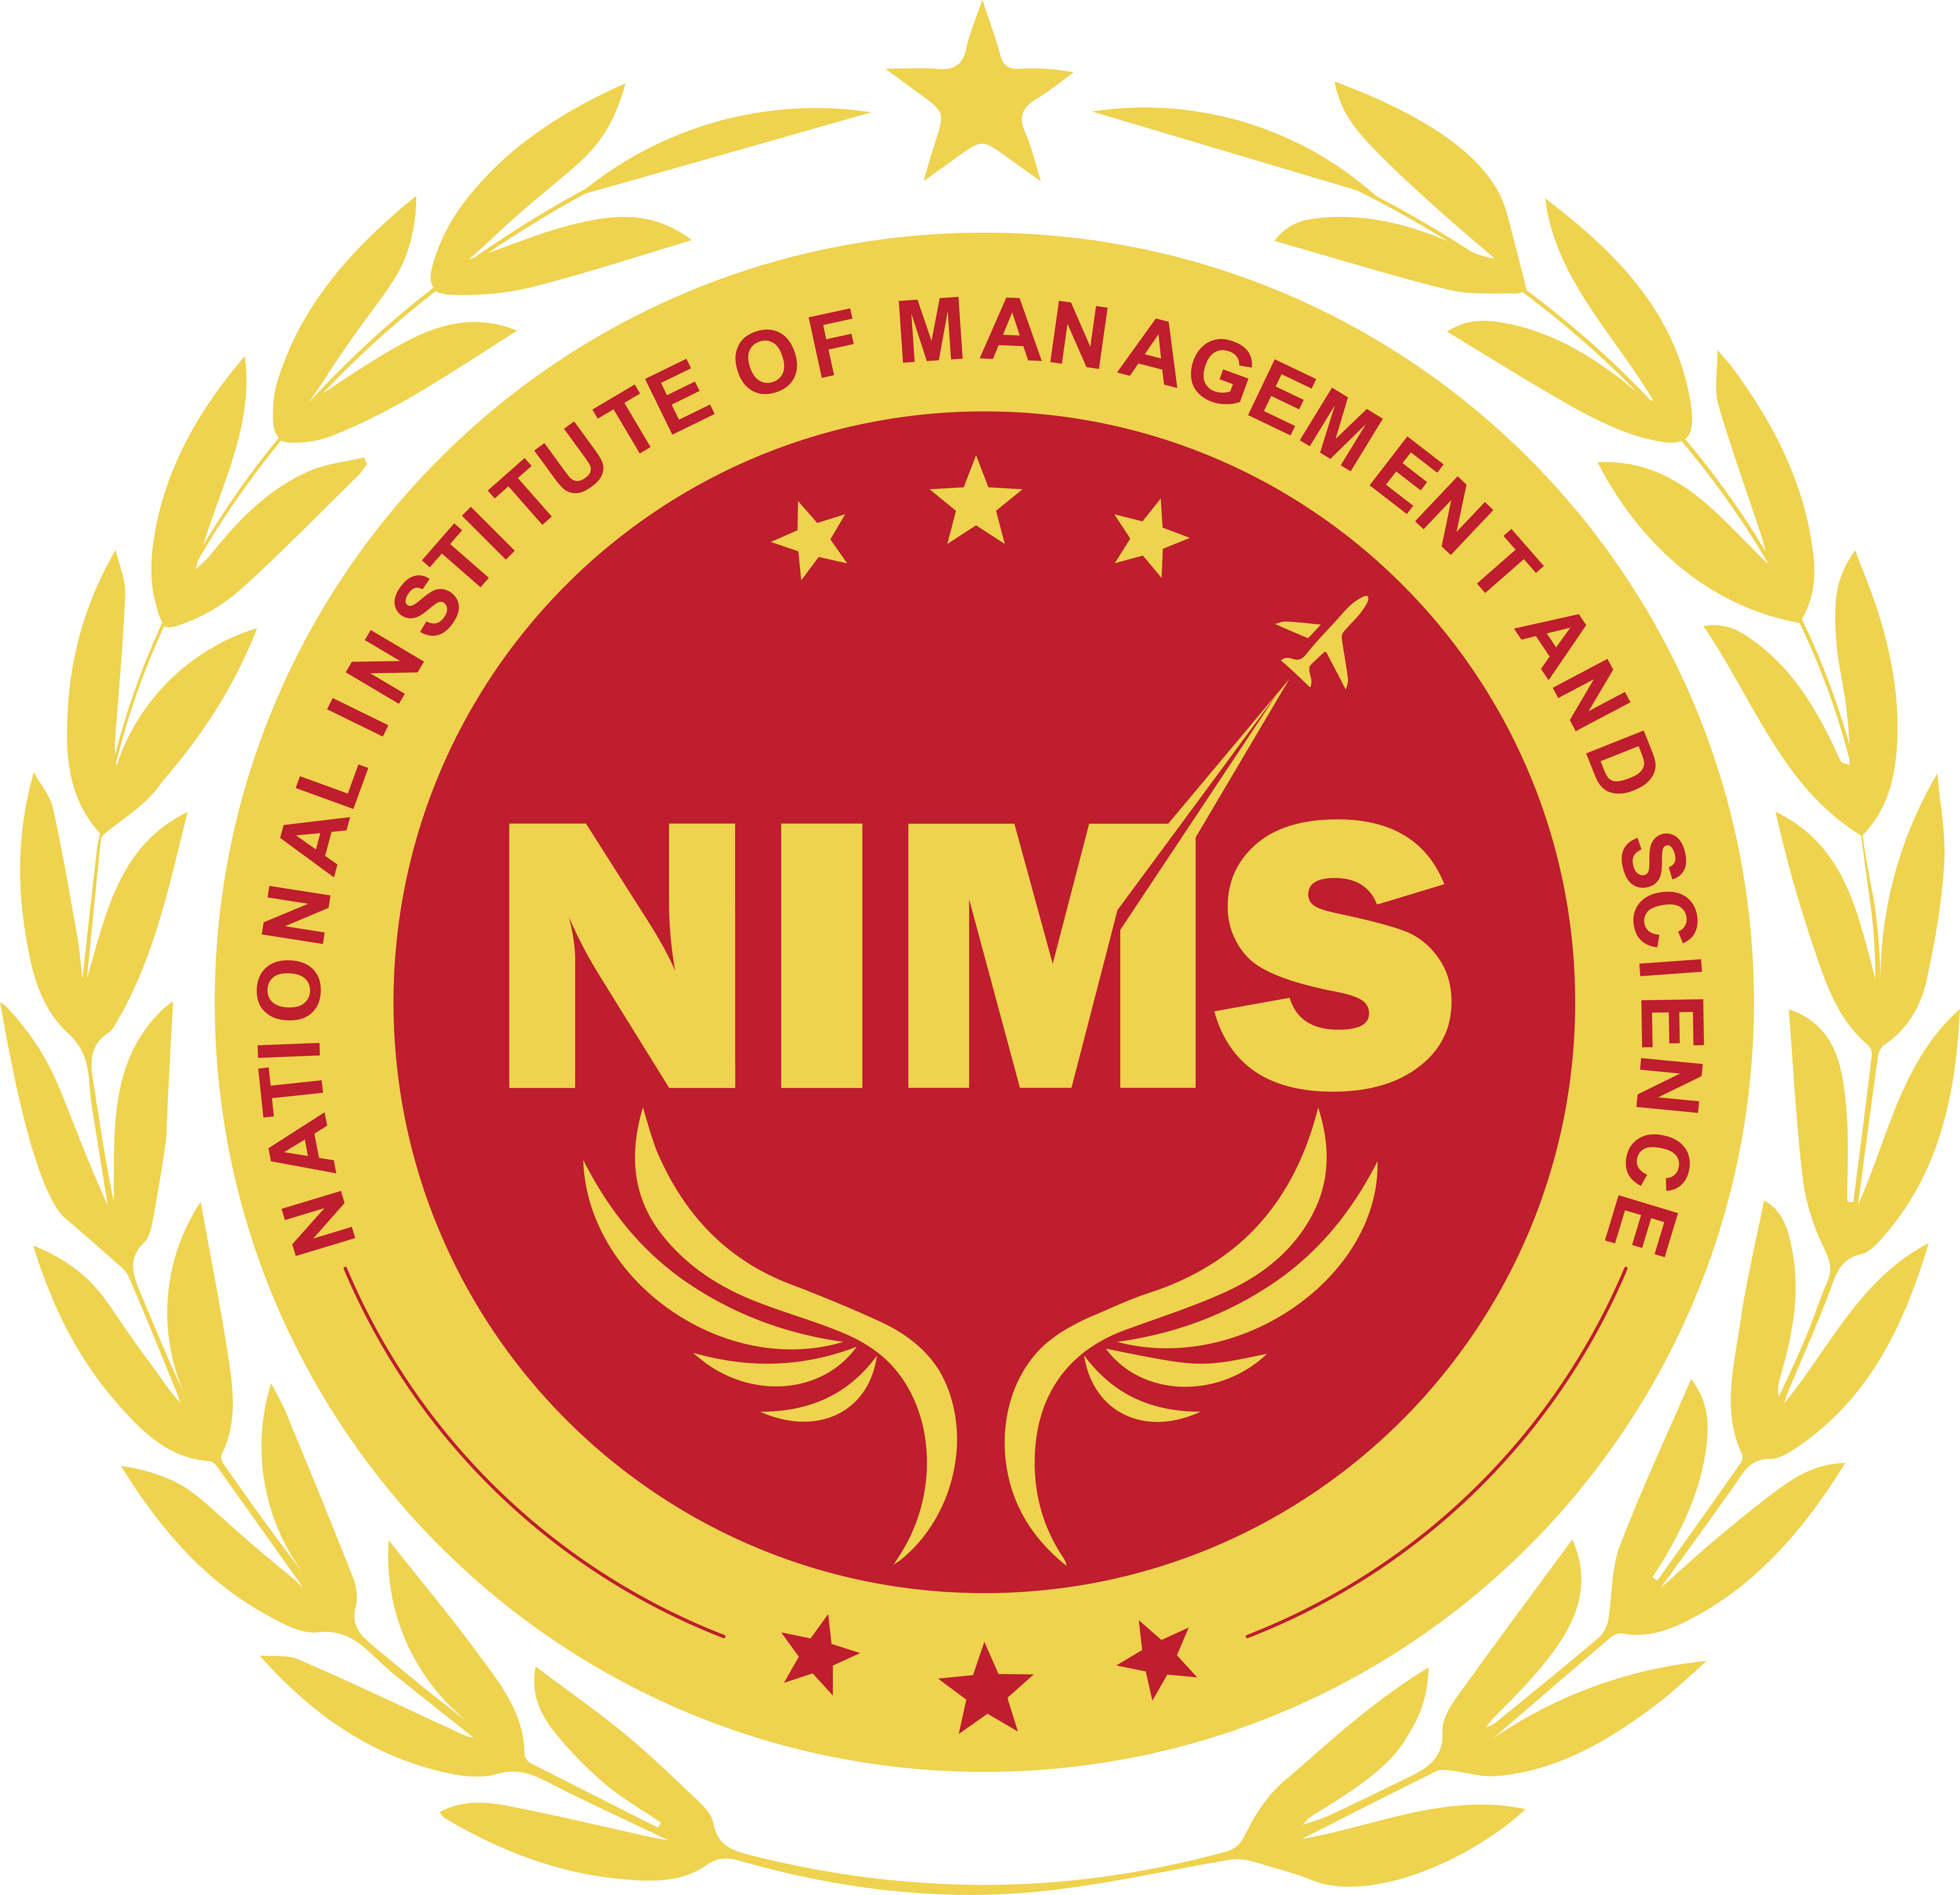 About Nims logo